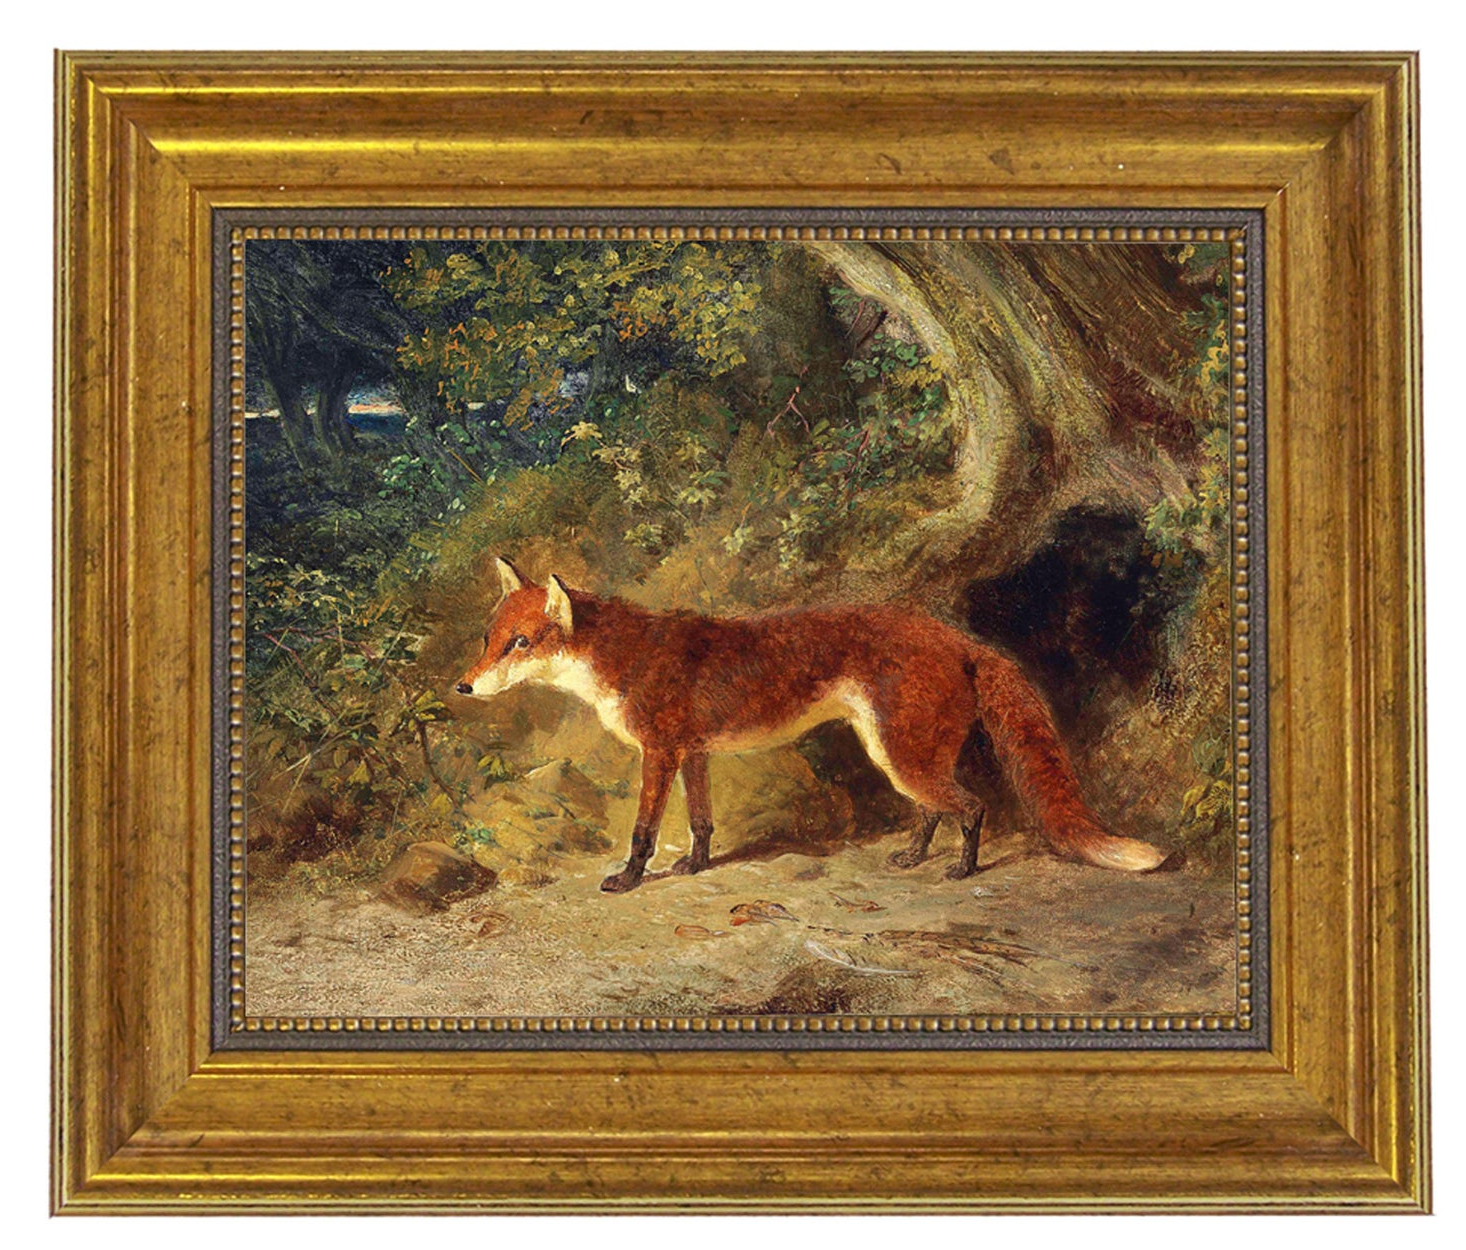 the framed oil painting